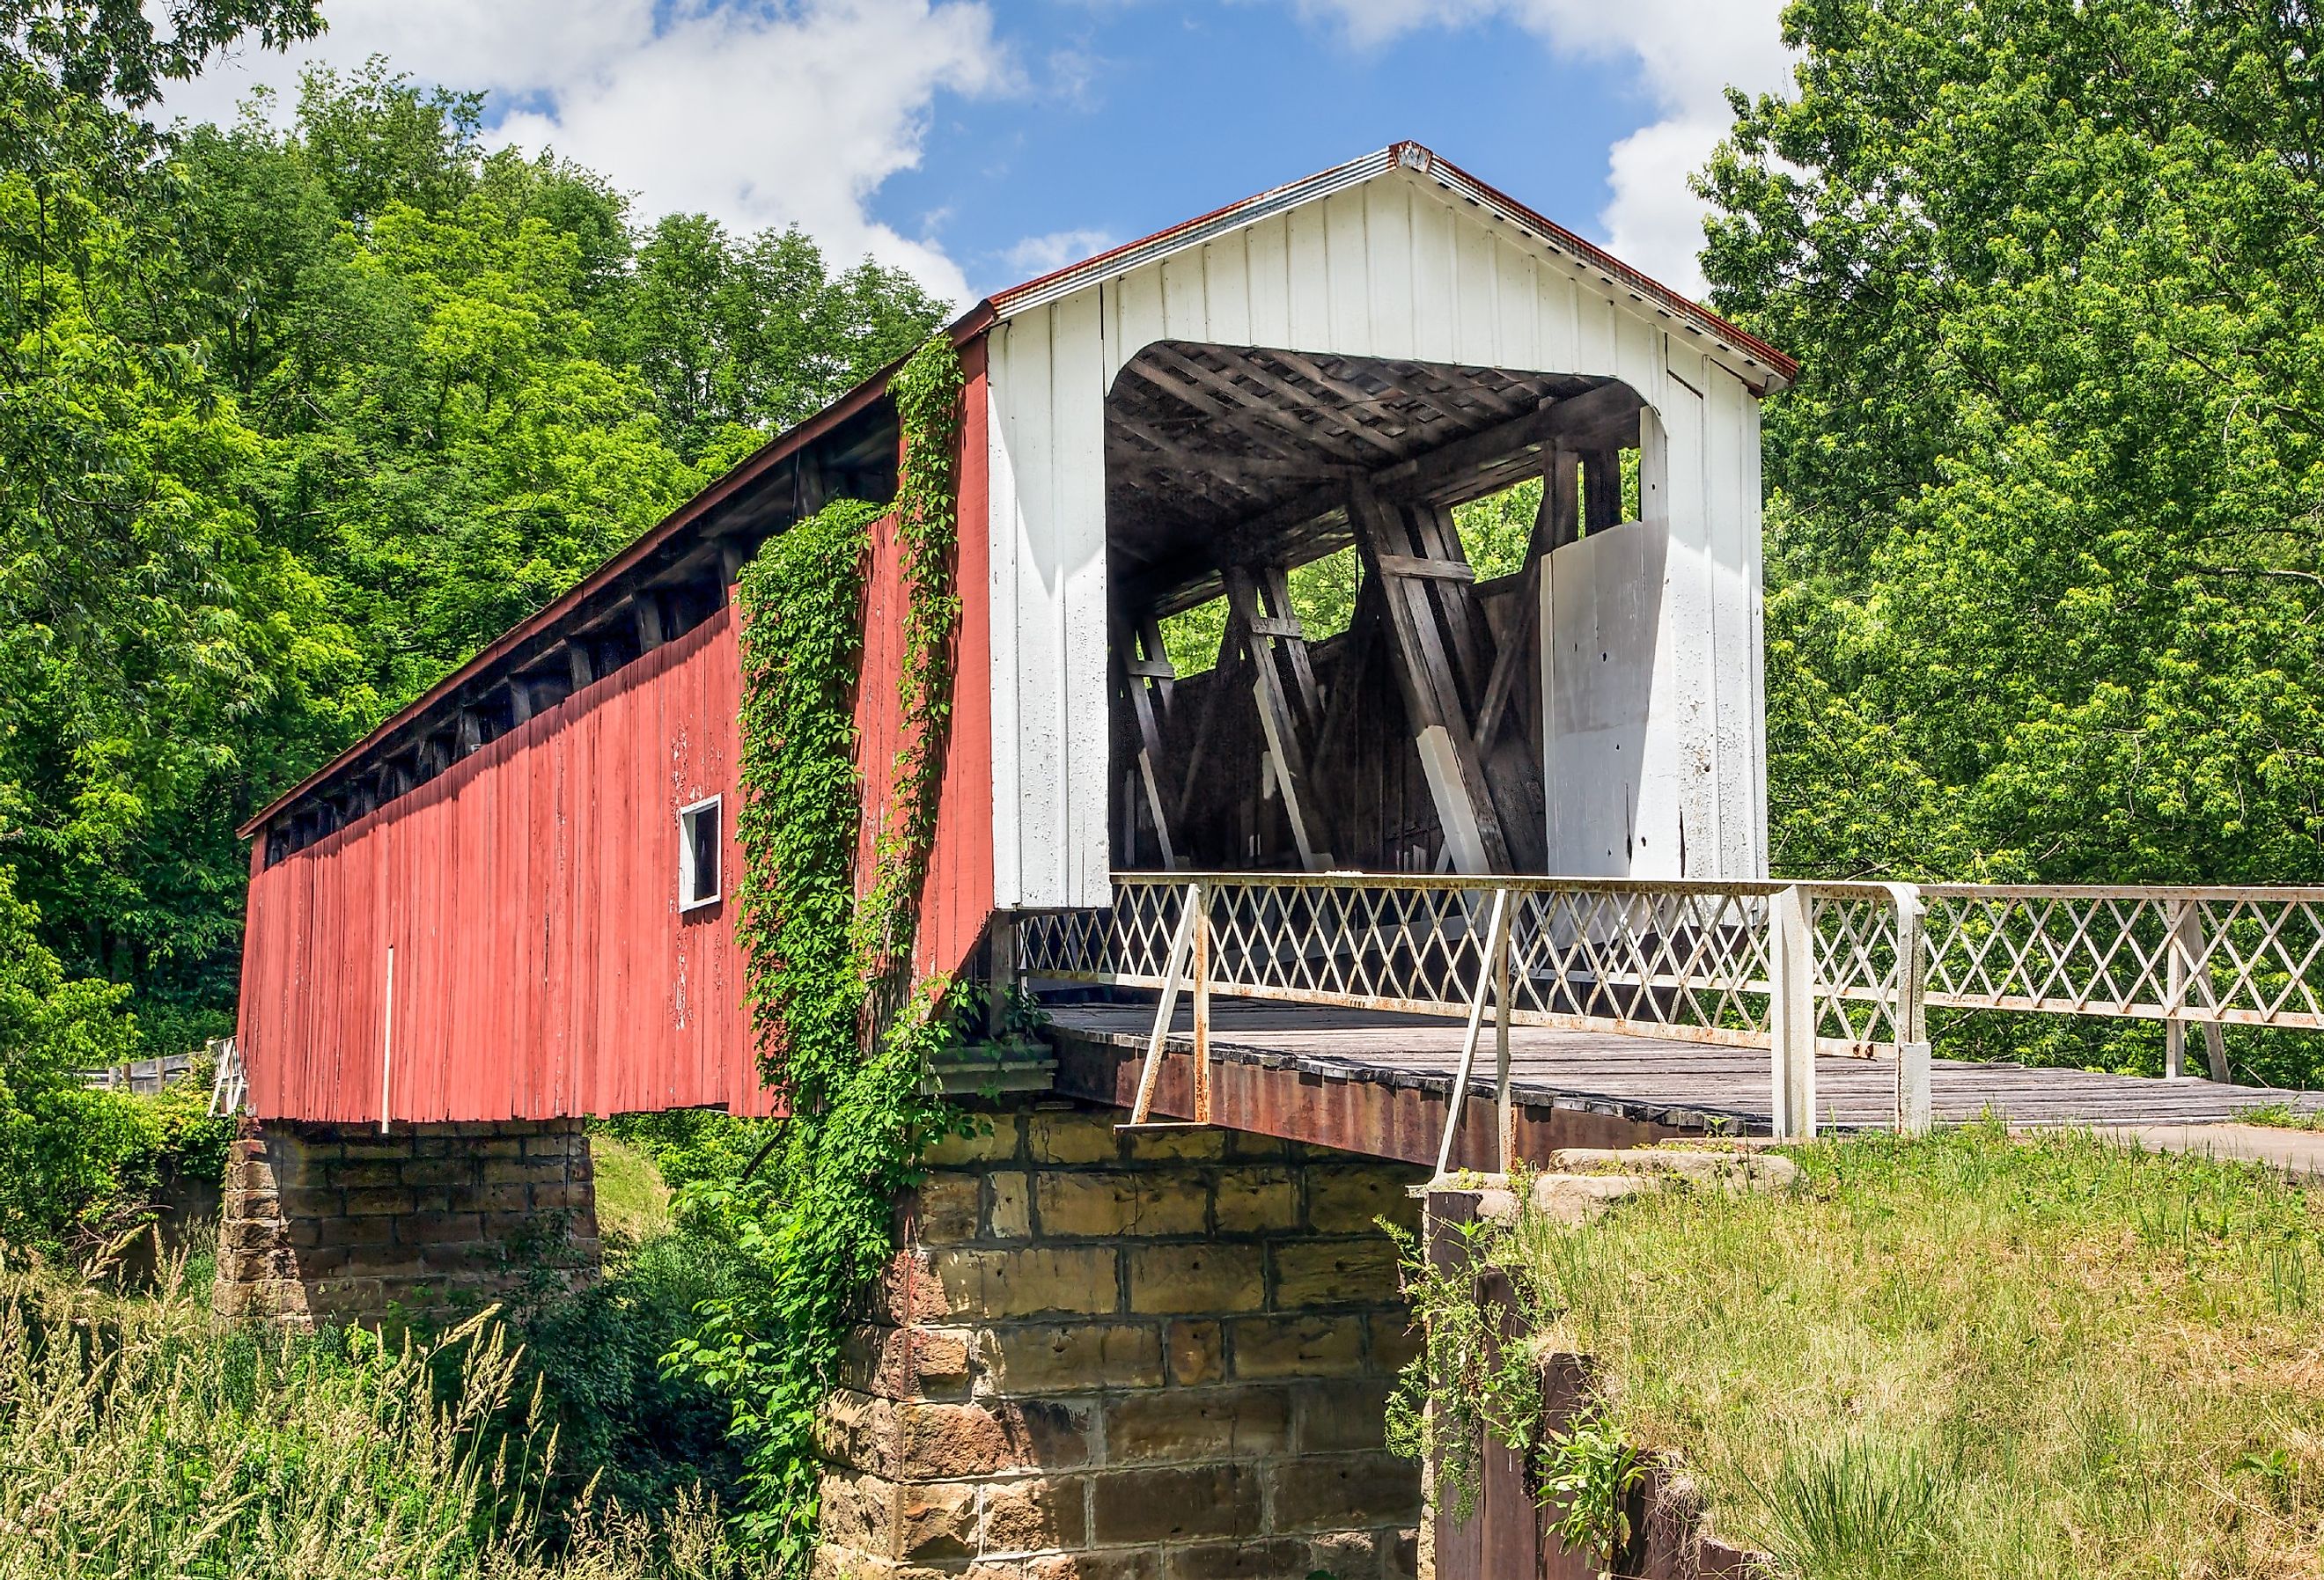 Historic Hills Covered Bridge crosses the Little Muskingum River near Marietta in Washington County, Ohio.